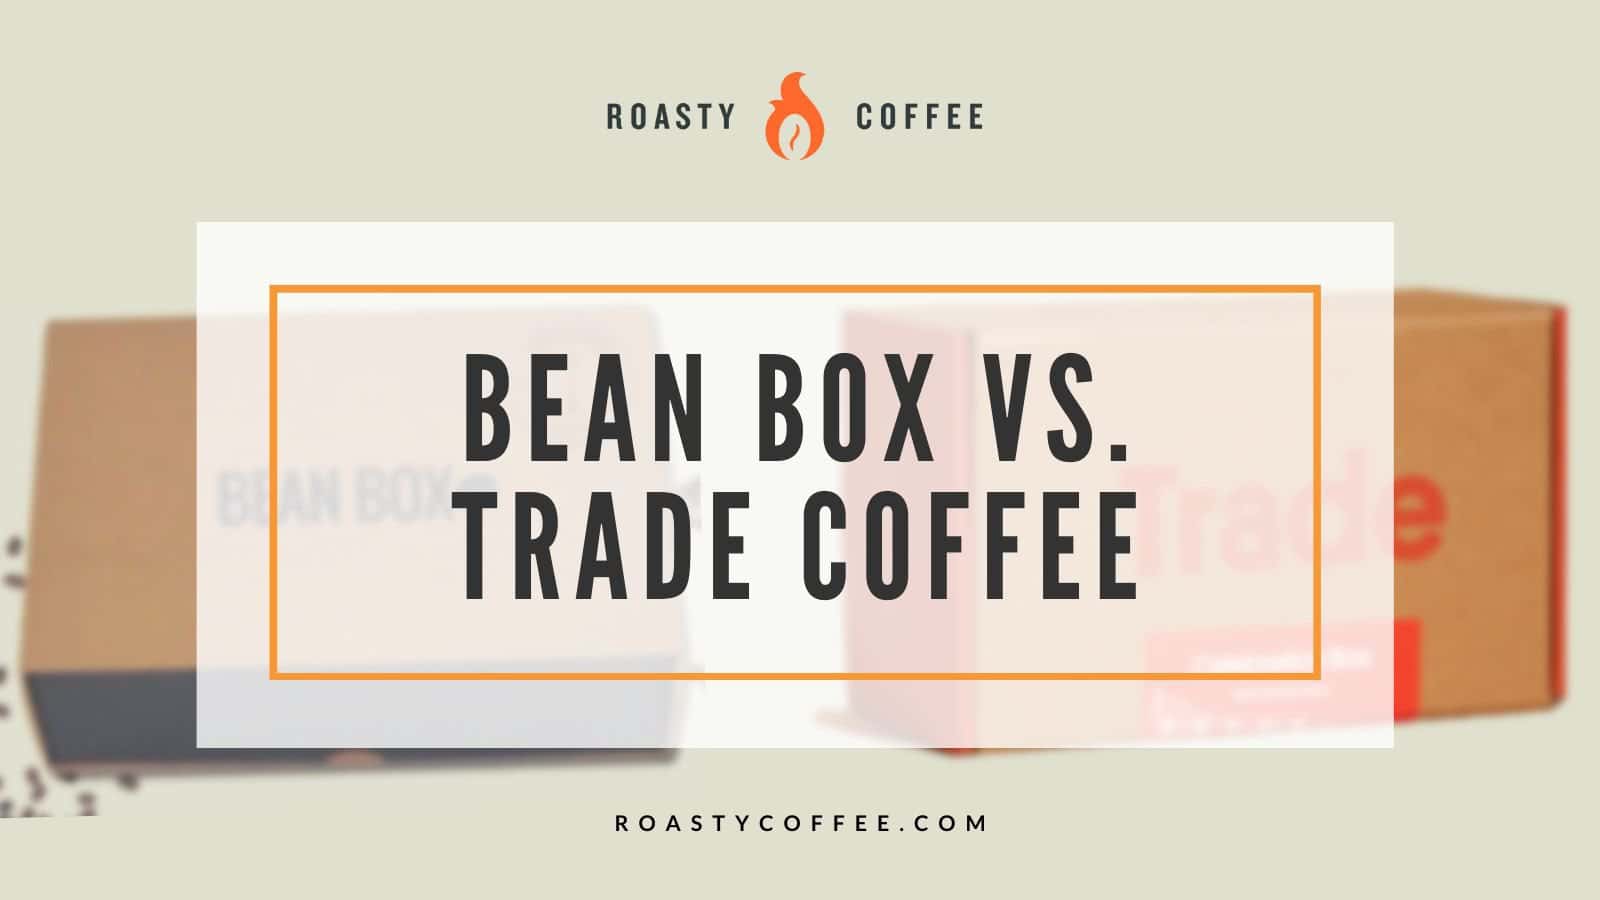 Bean Box vs Trade Coffee